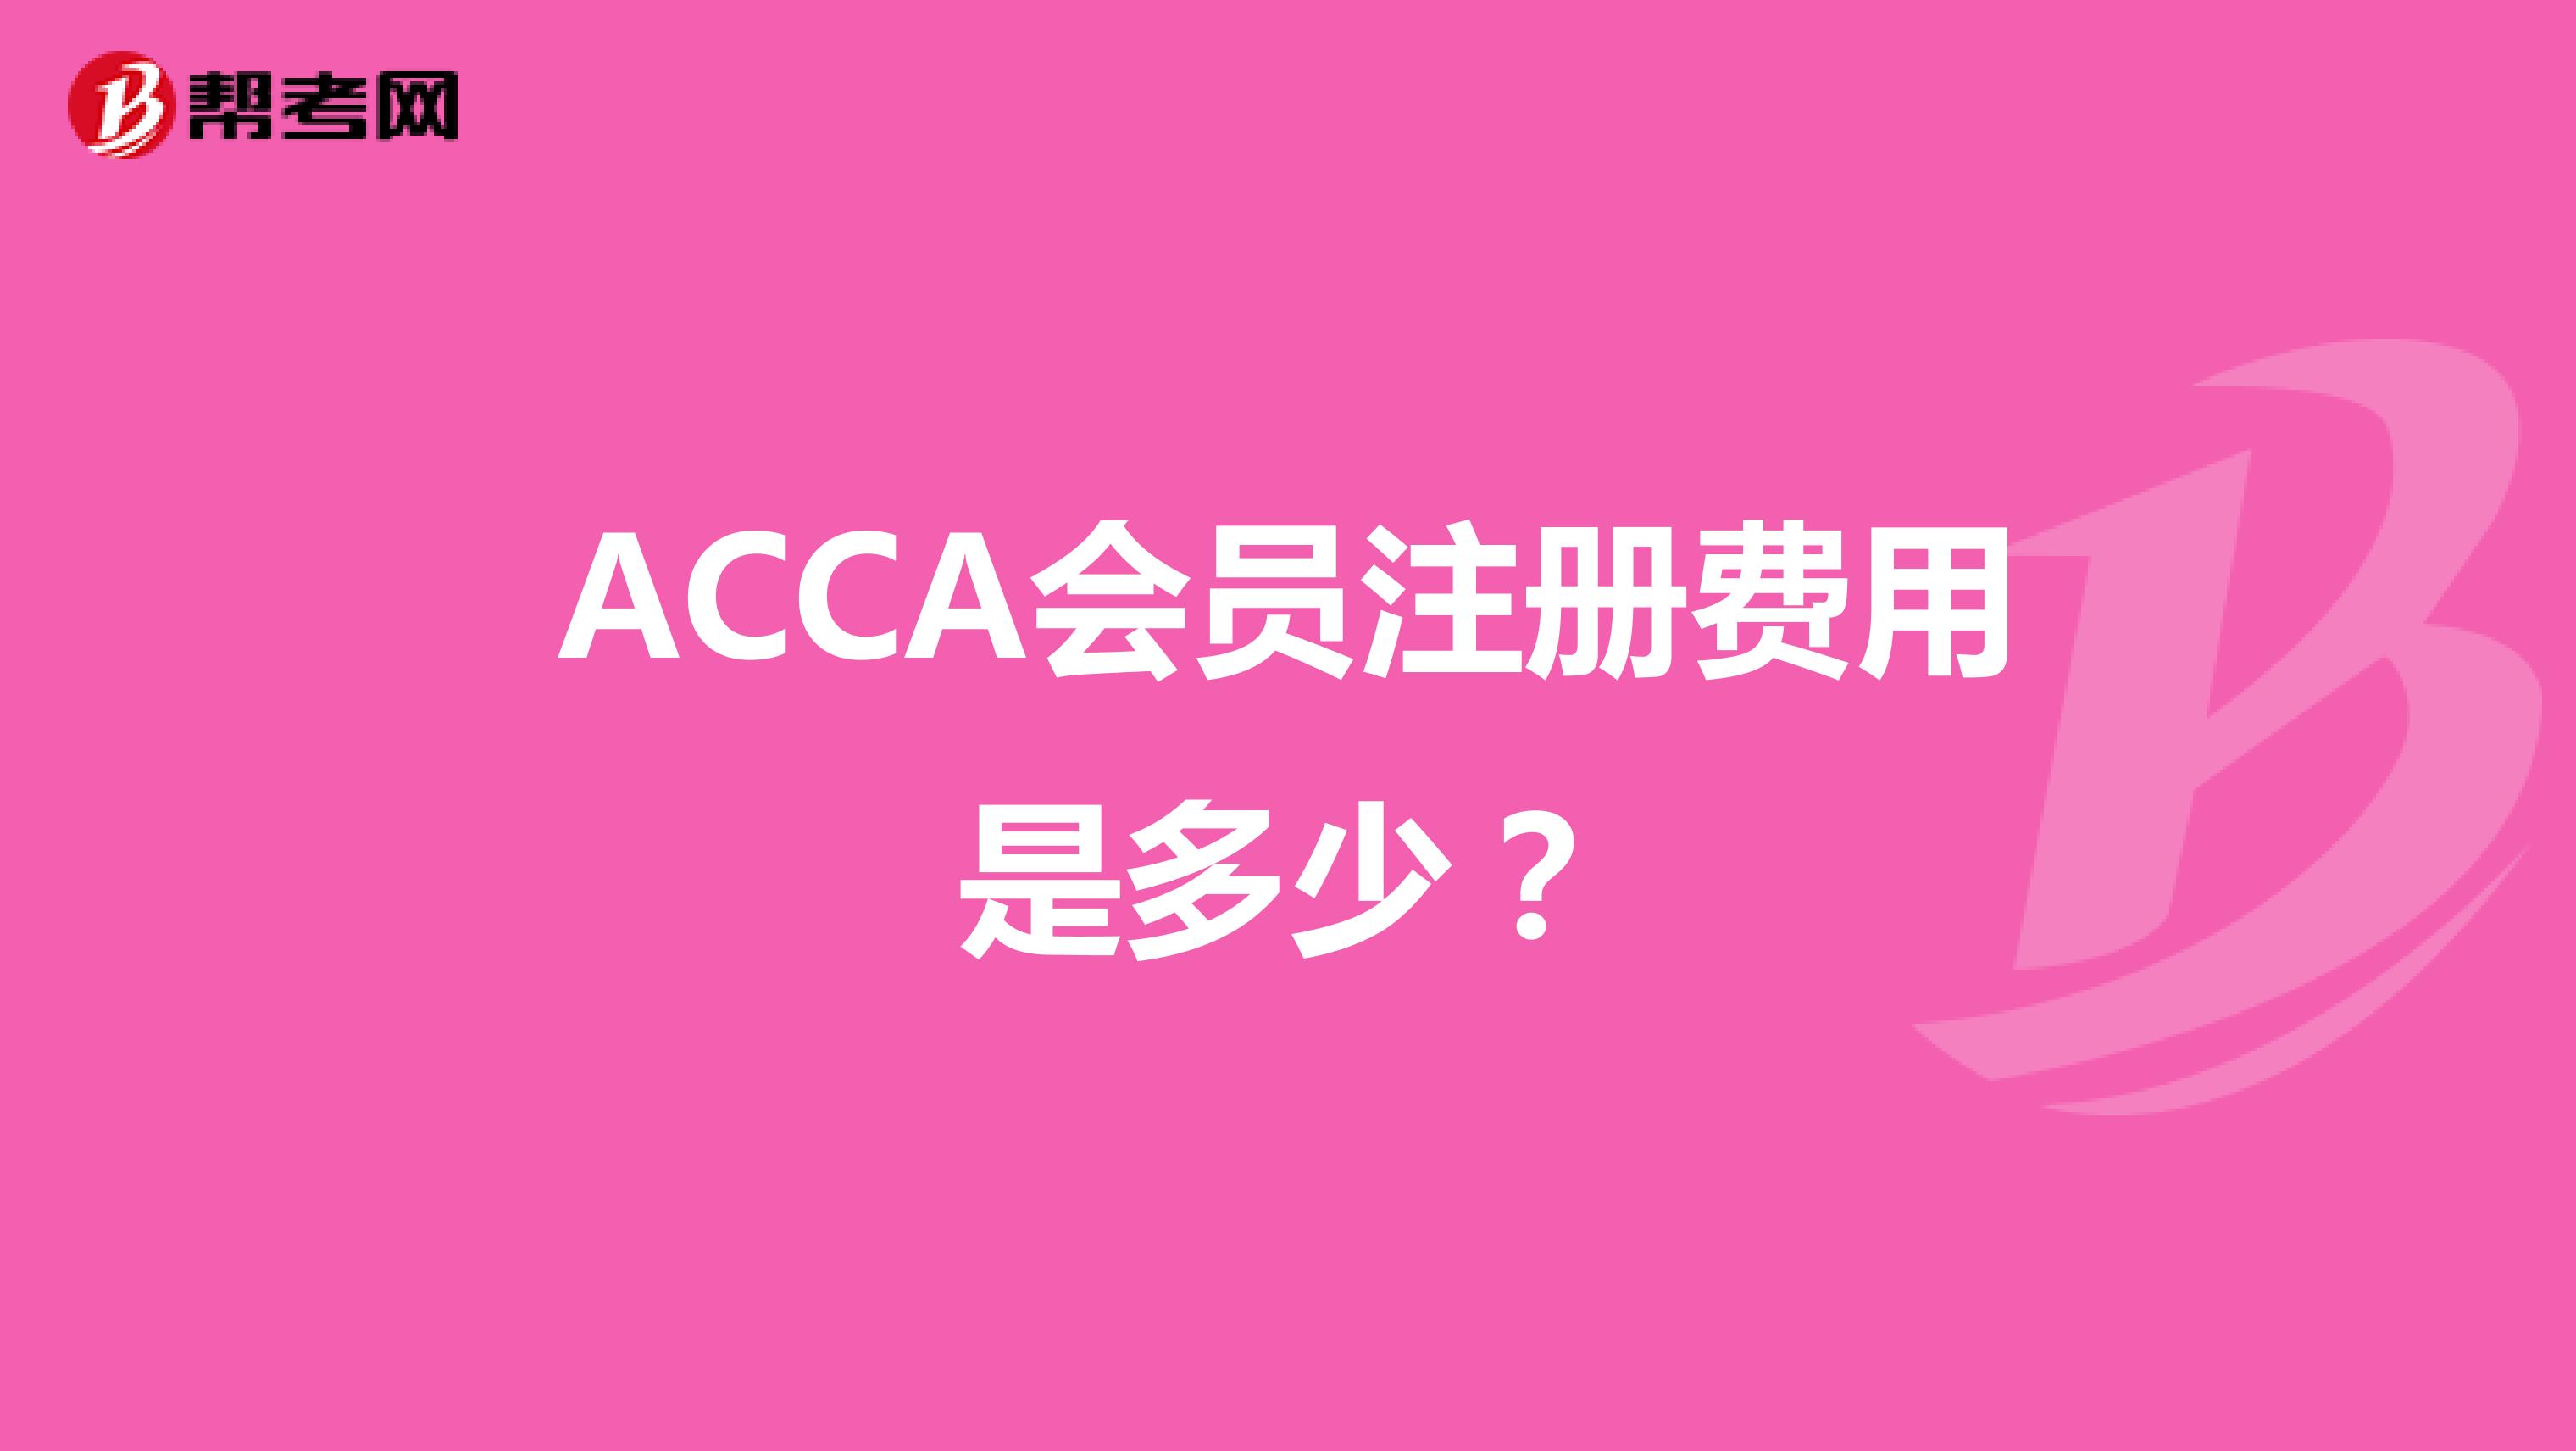 ACCA会员注册费用是多少？